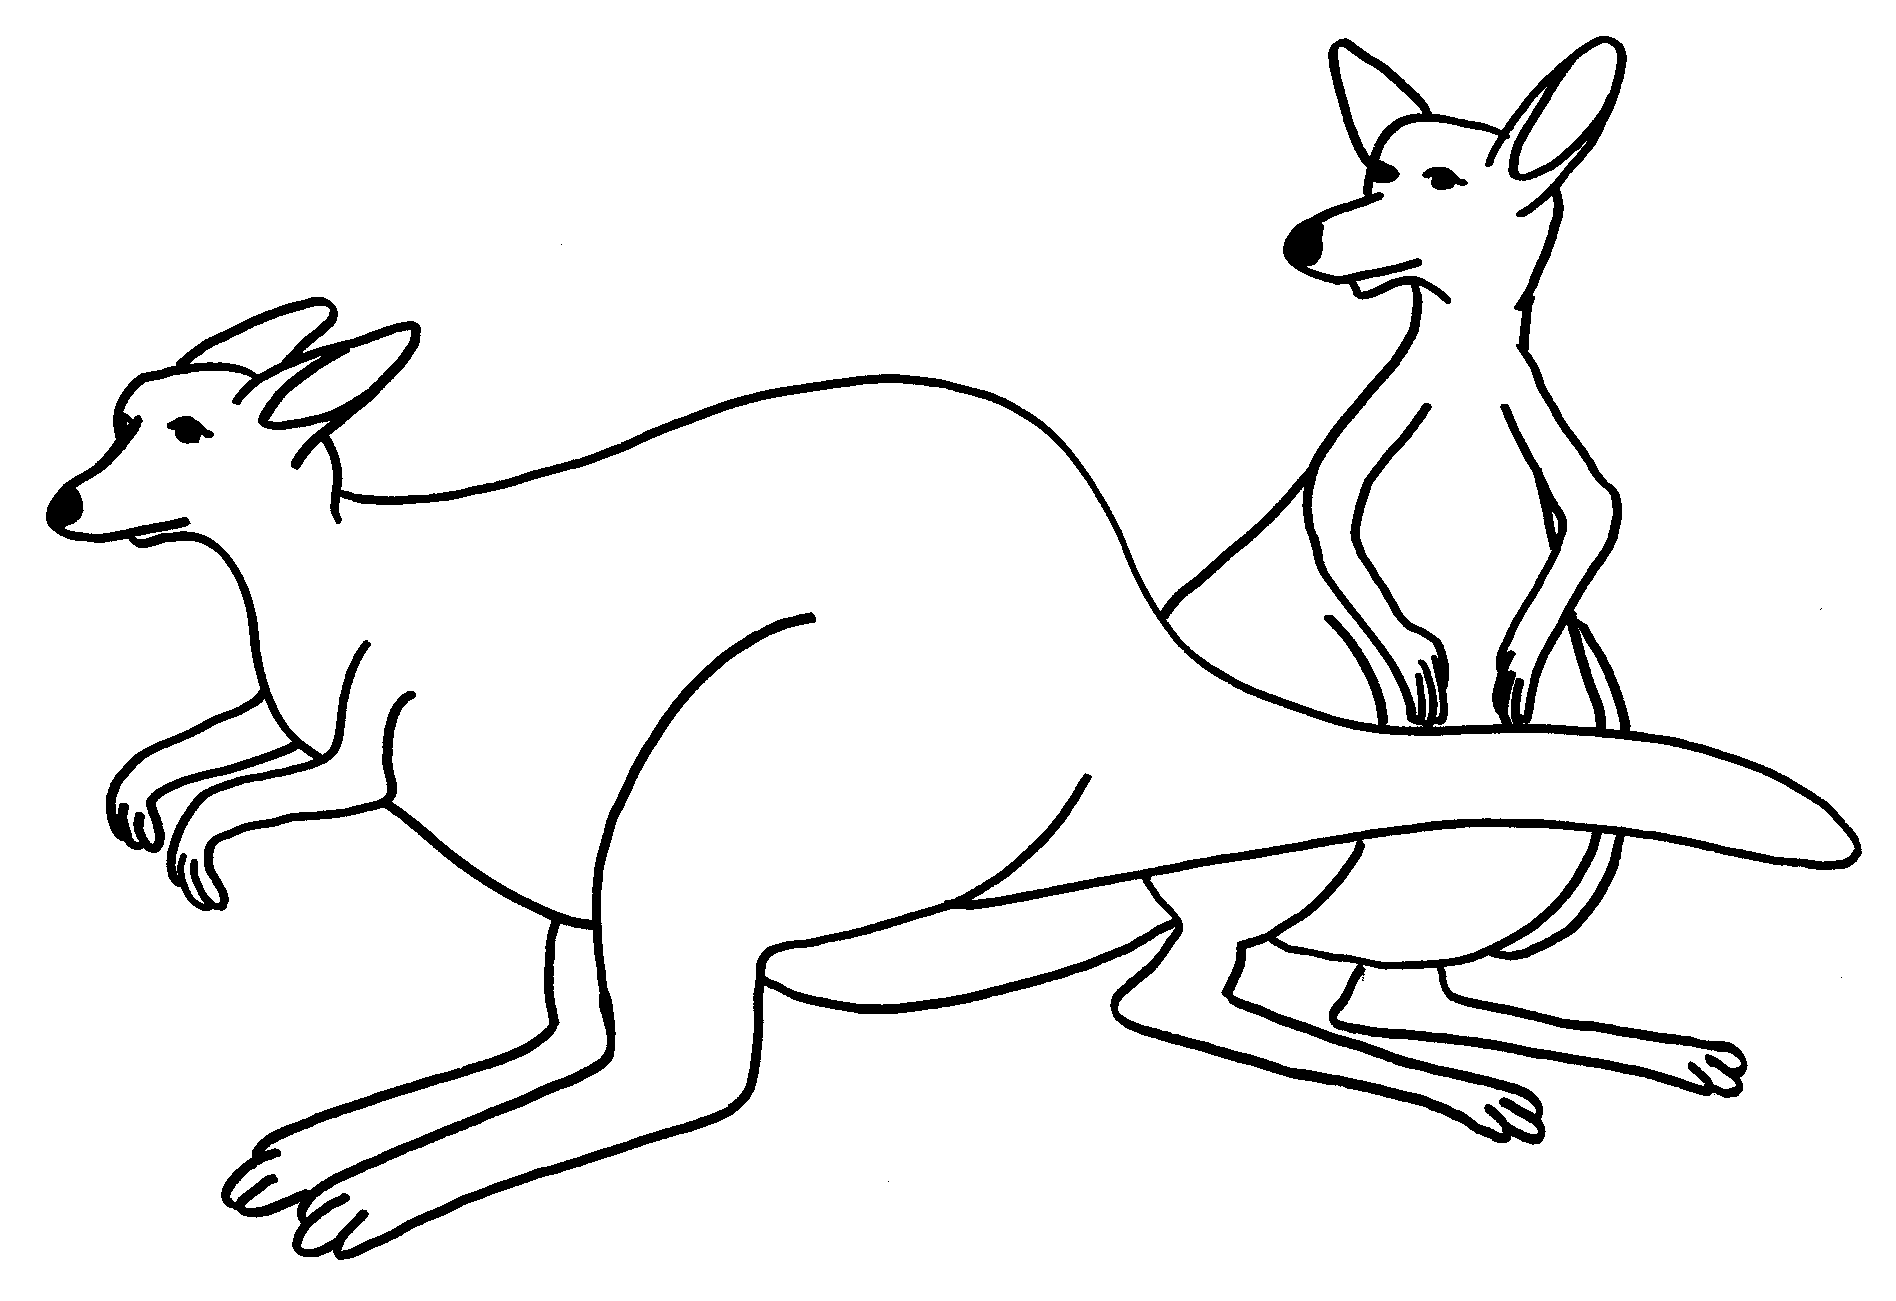 Coloring page: Kangaroo (Animals) #9136 - Free Printable Coloring Pages